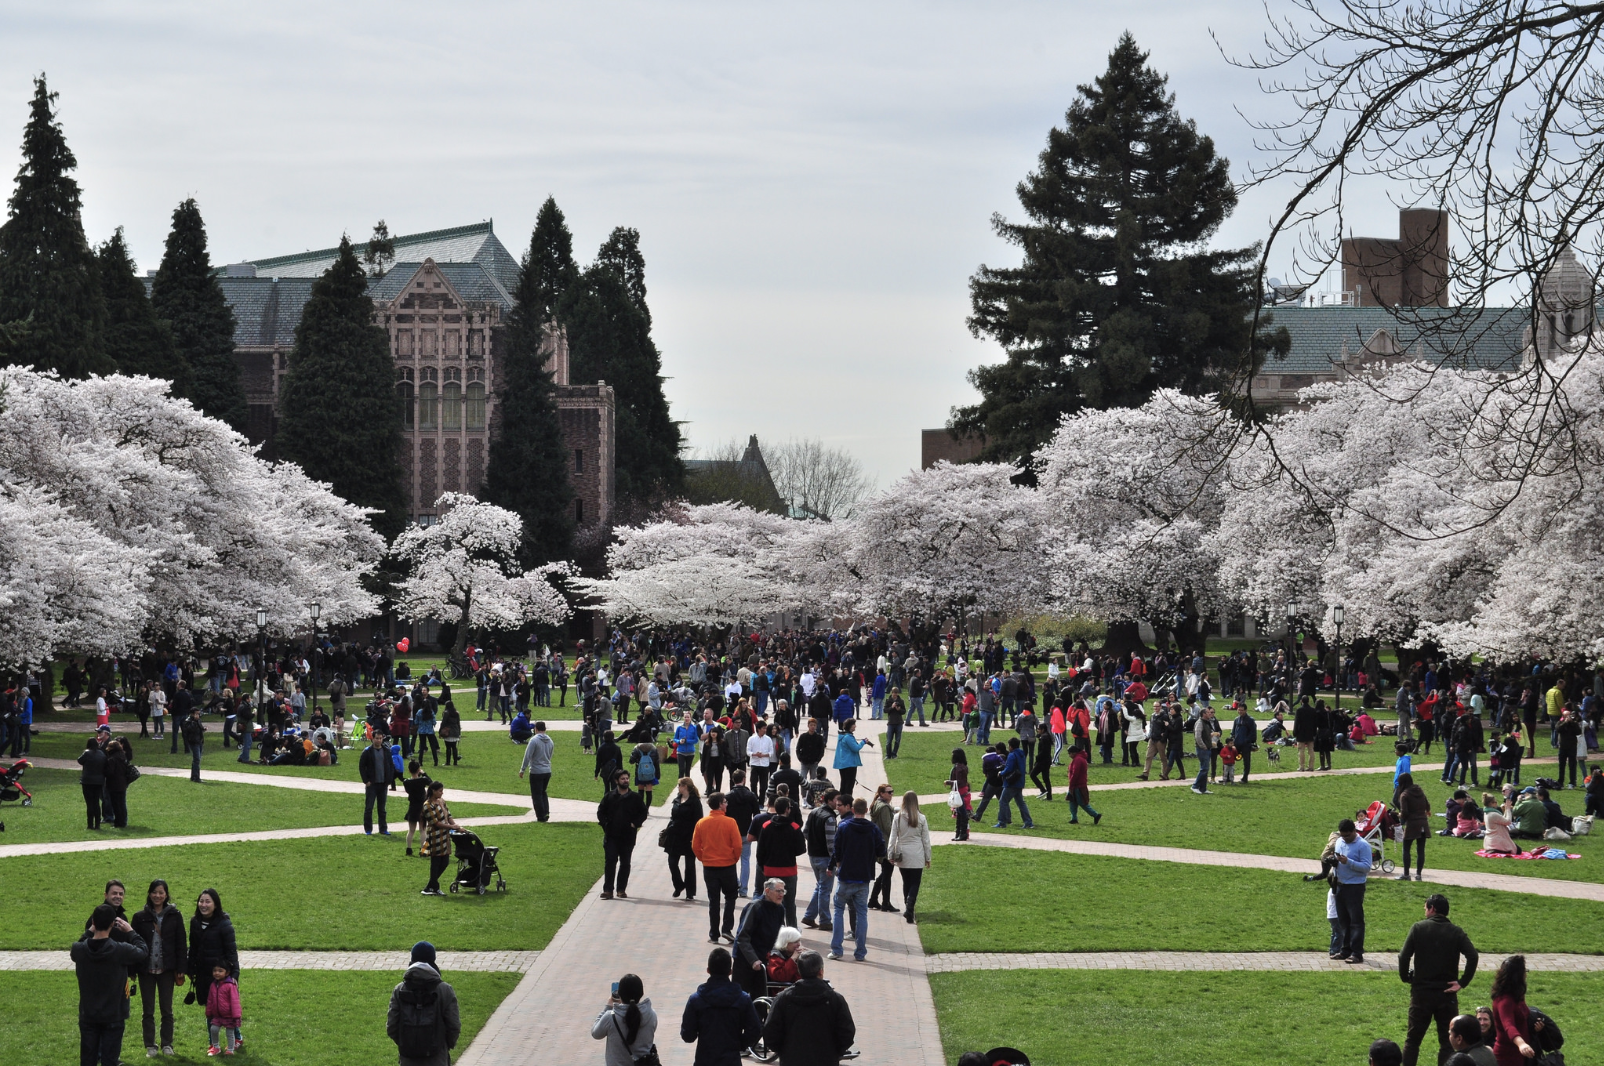 University of Washington Quad cherry blossoms 2014